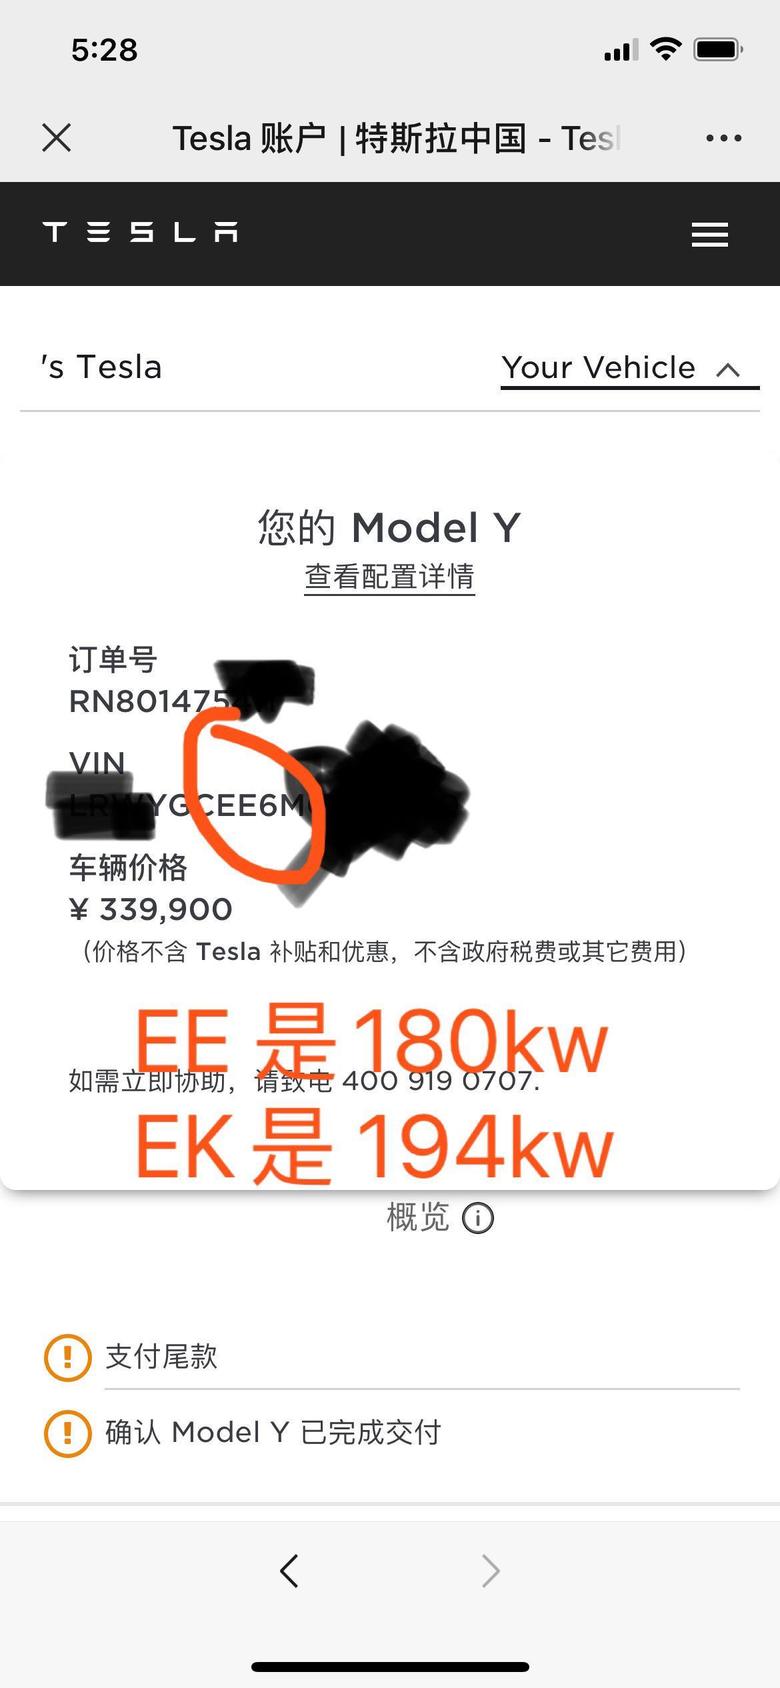 model y 匹配了，显示是A0的批次，是180kw的电机那么问题来了，到底是国产电机好还是进口电机好？